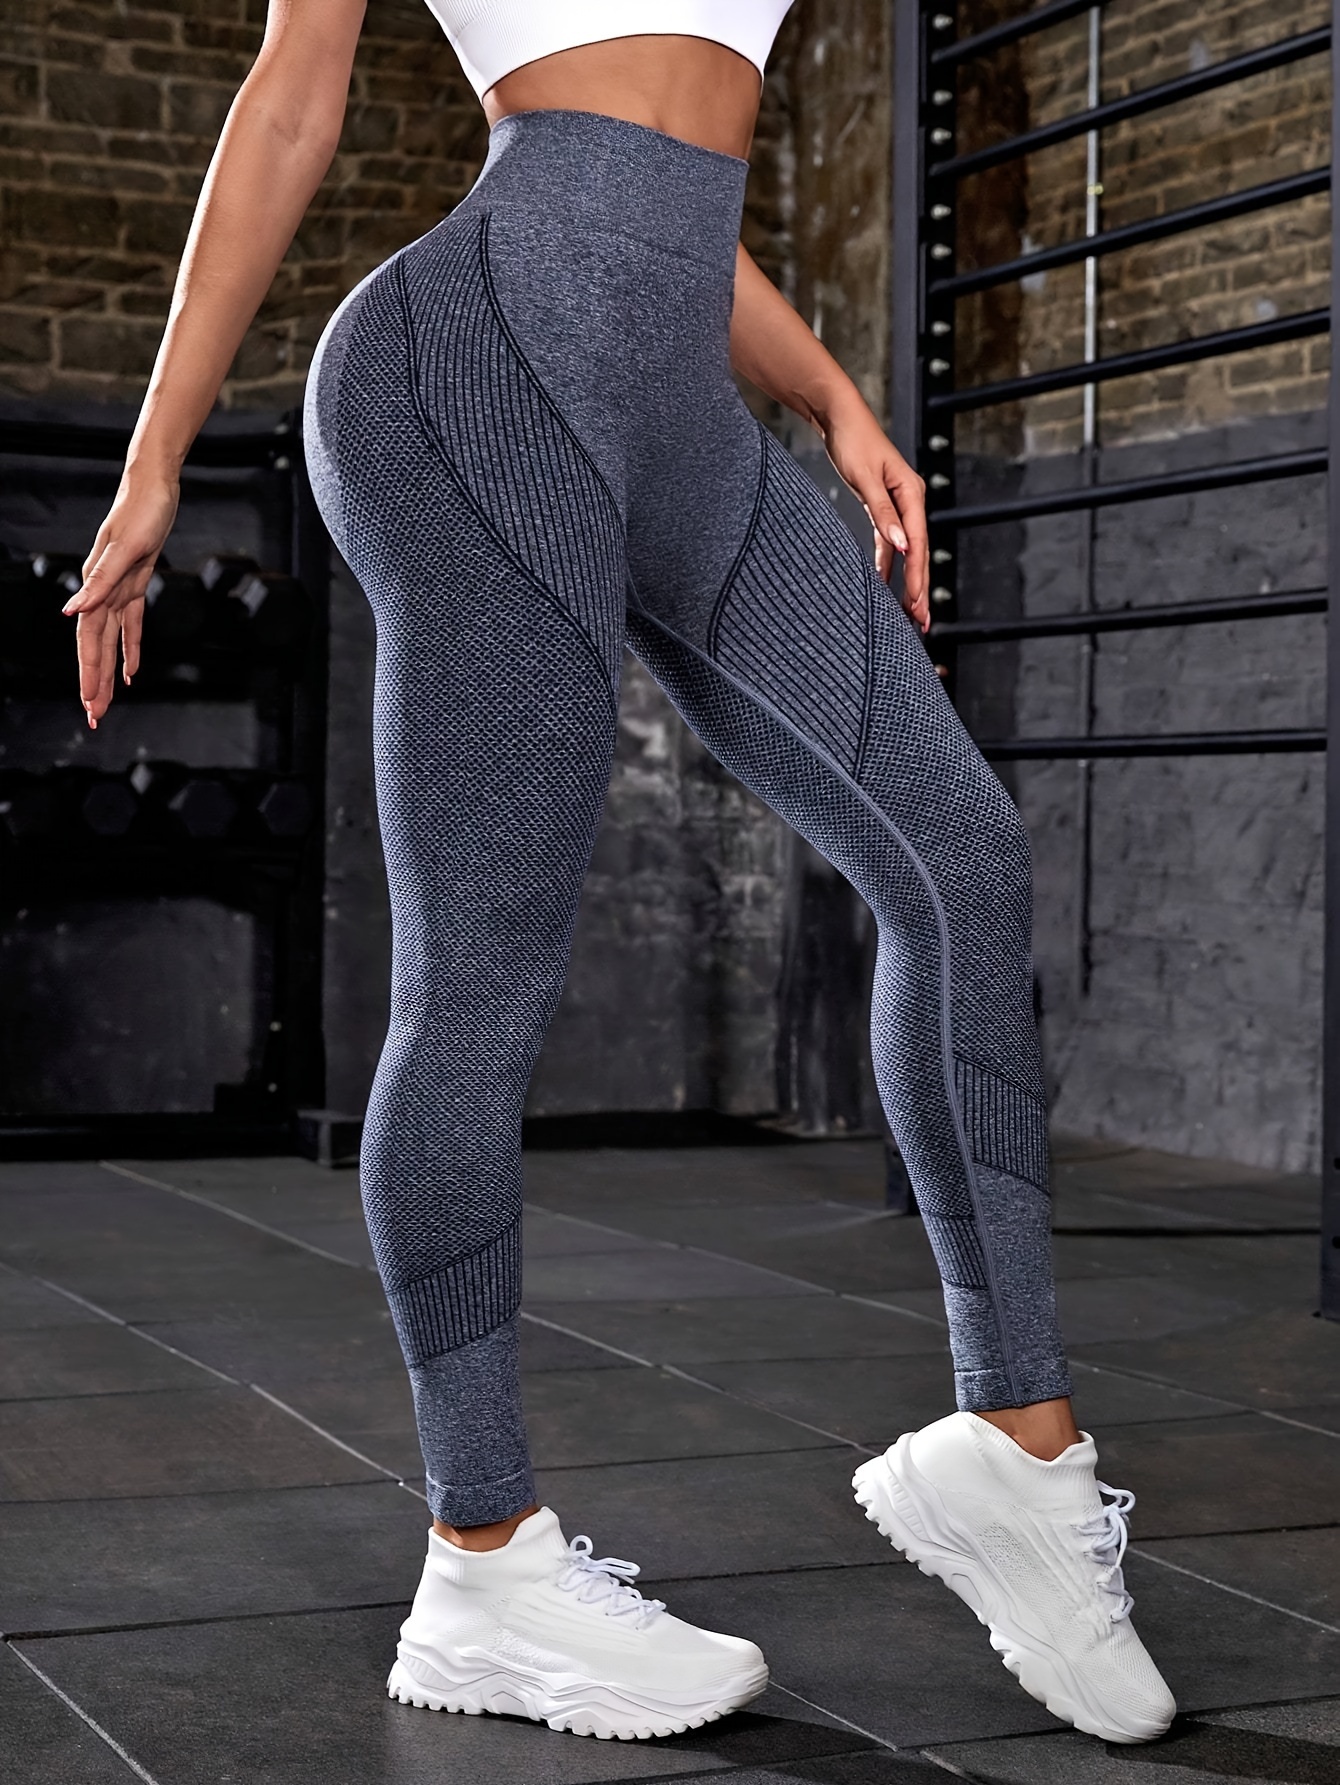 Women's pants sports gym yoga pants high waist stretch pants